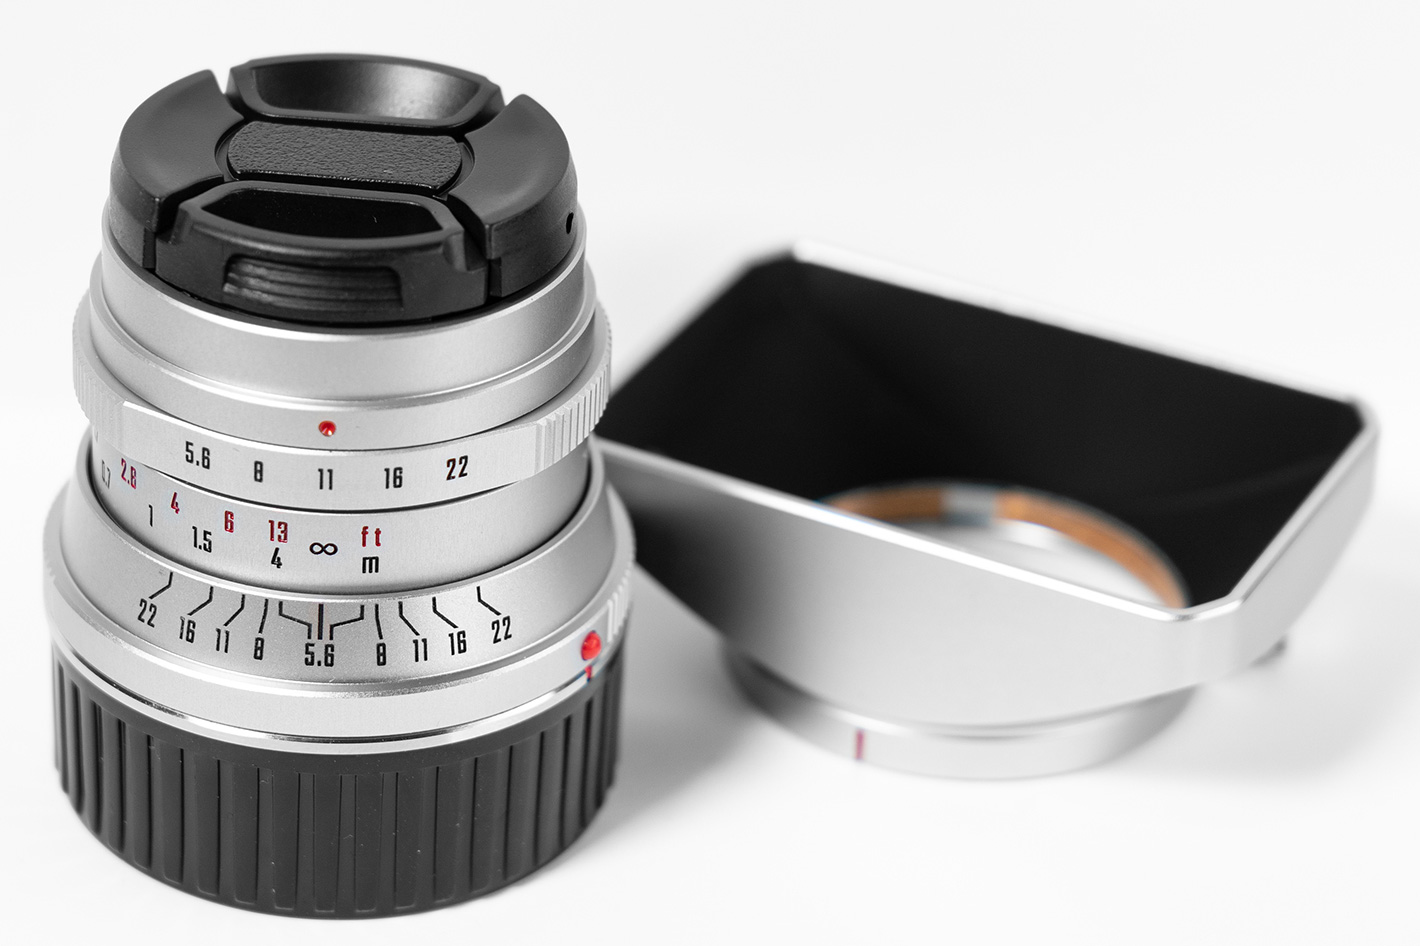 Mitakon Creator 28mm f/5.6 lens: a more affordable Leica